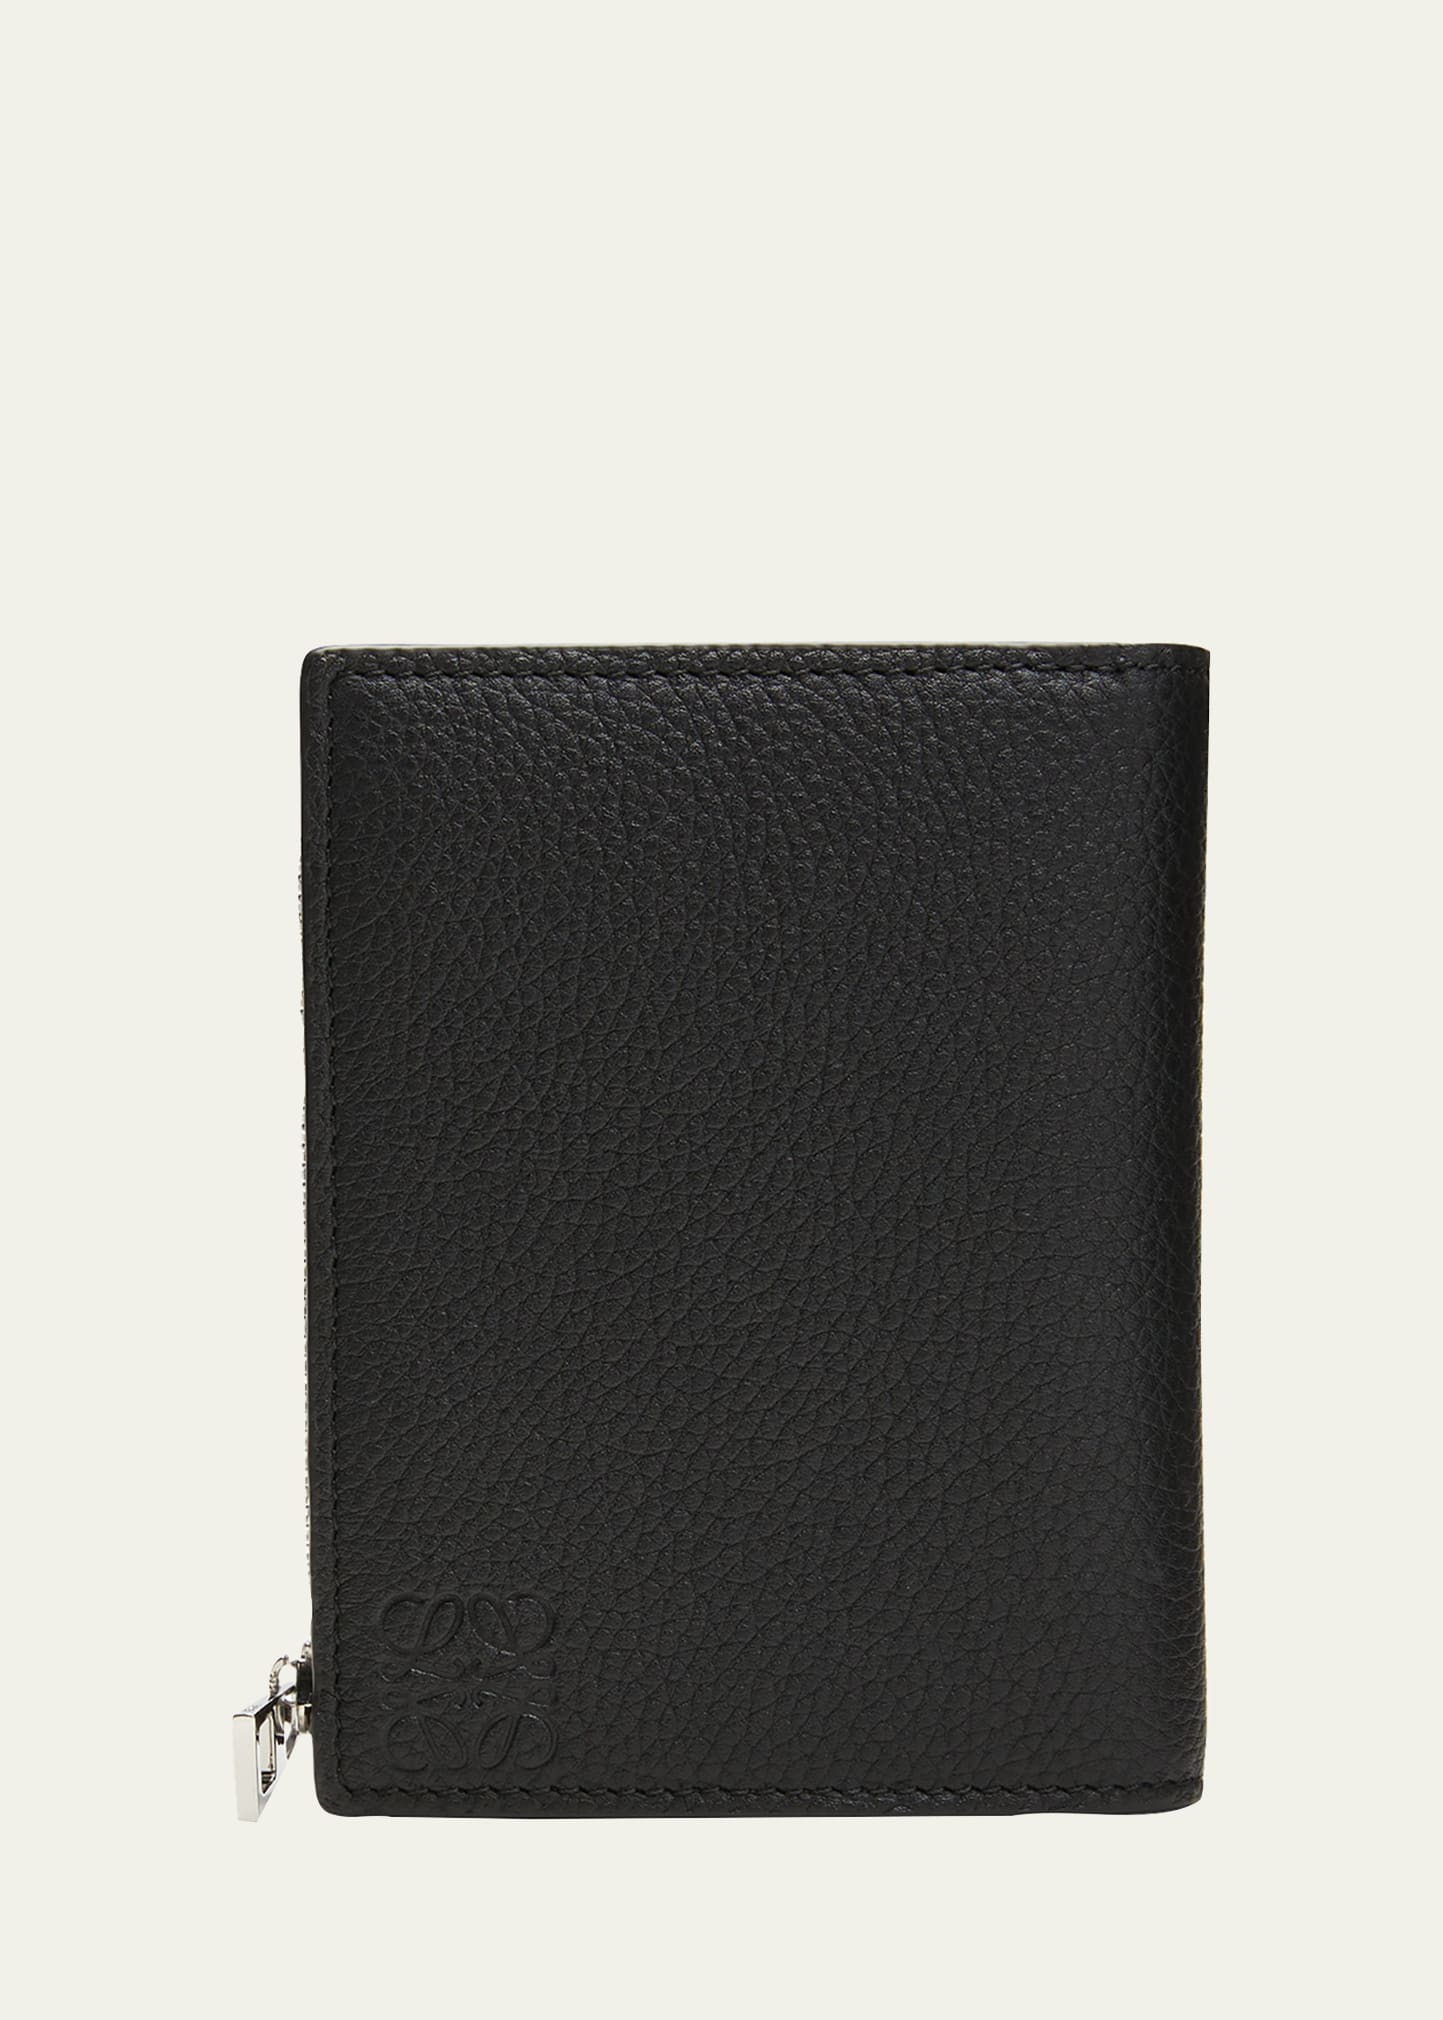 Loewe Men's Leather Bifold Wallet With Zip Coin Pocket In Black